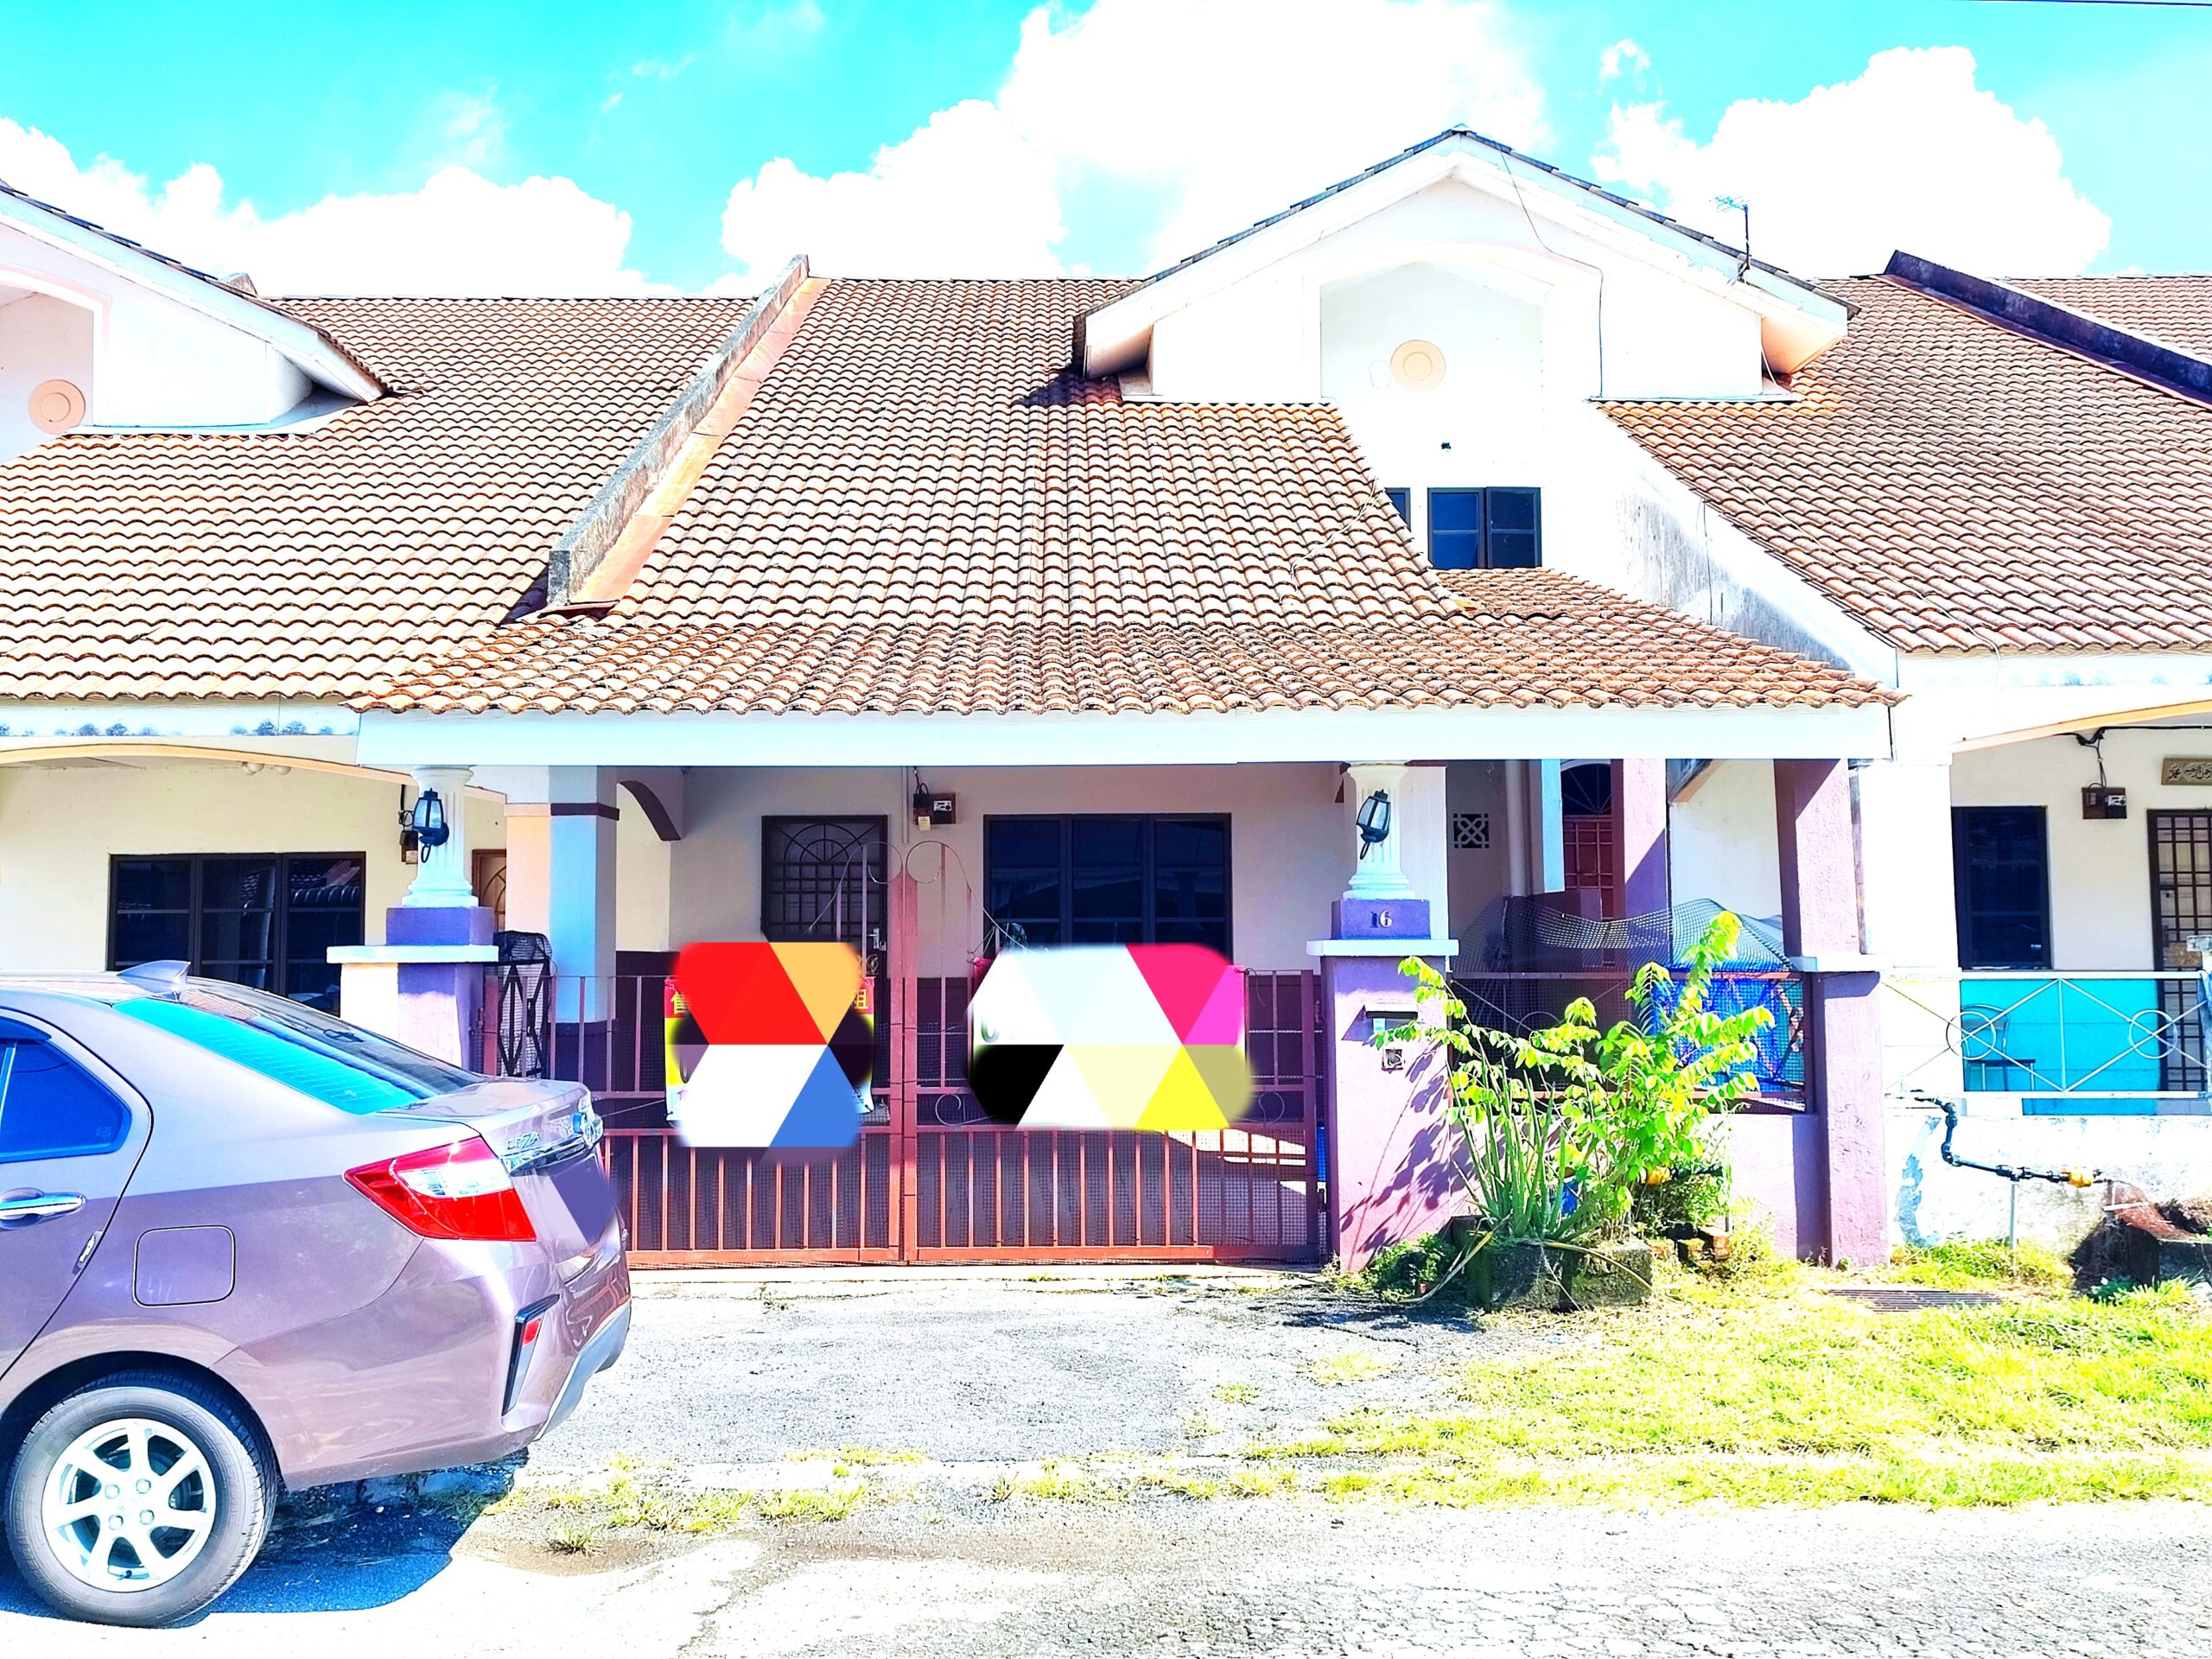 Rumah Teres Setingkat Setengah Untuk Dijual di Halaman Meru Permai, Bandar Meru Raya Ipoh Perak